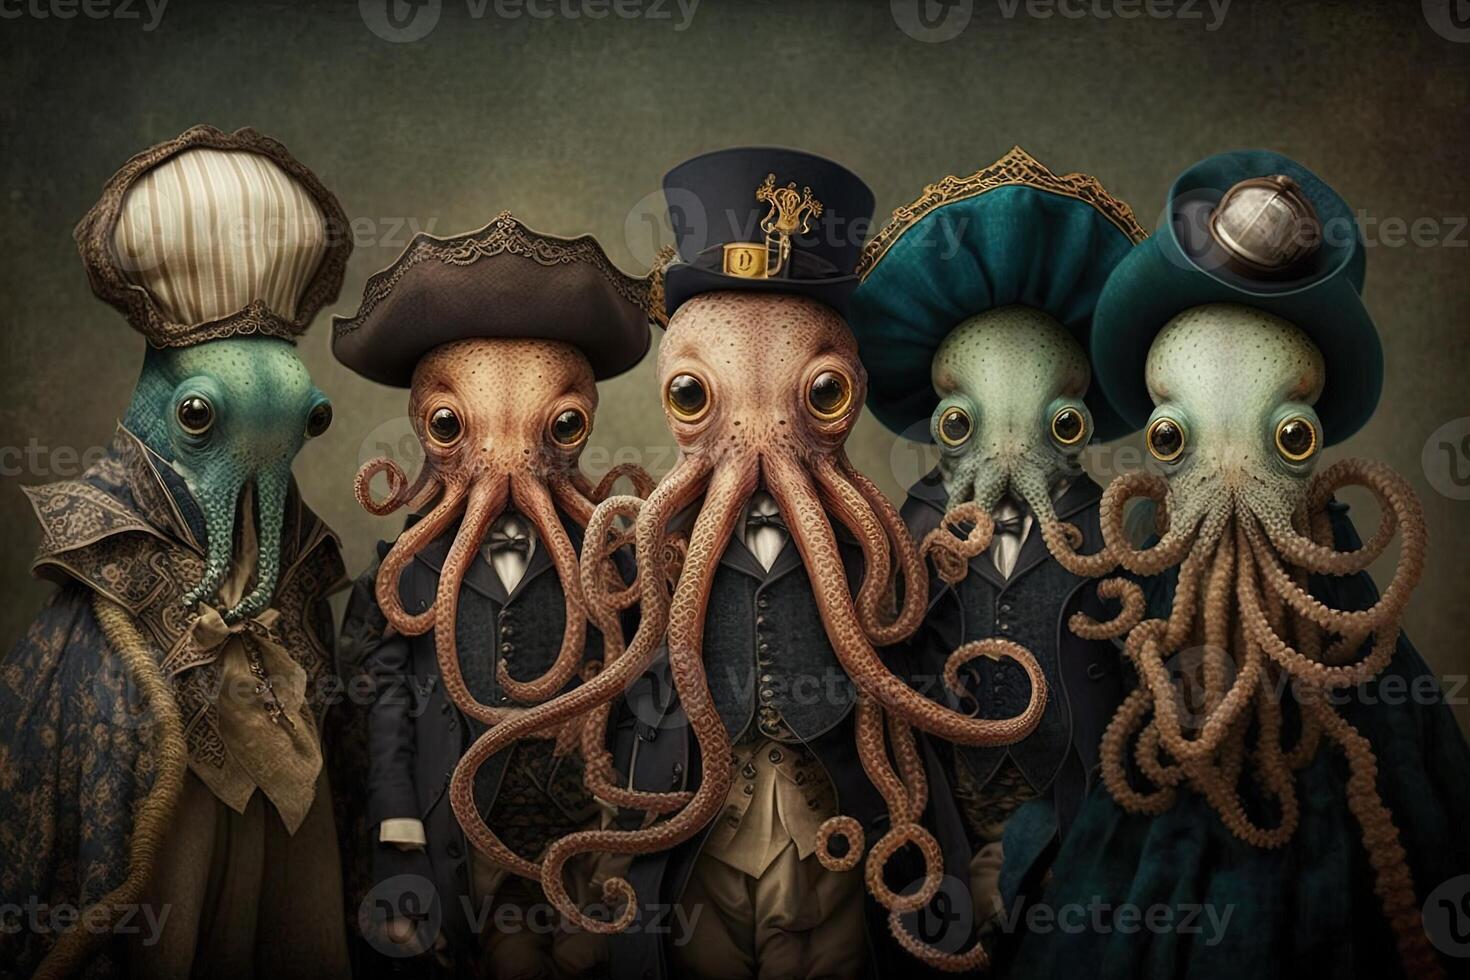 octopus animals dressed in victorian era clothing illustration photo